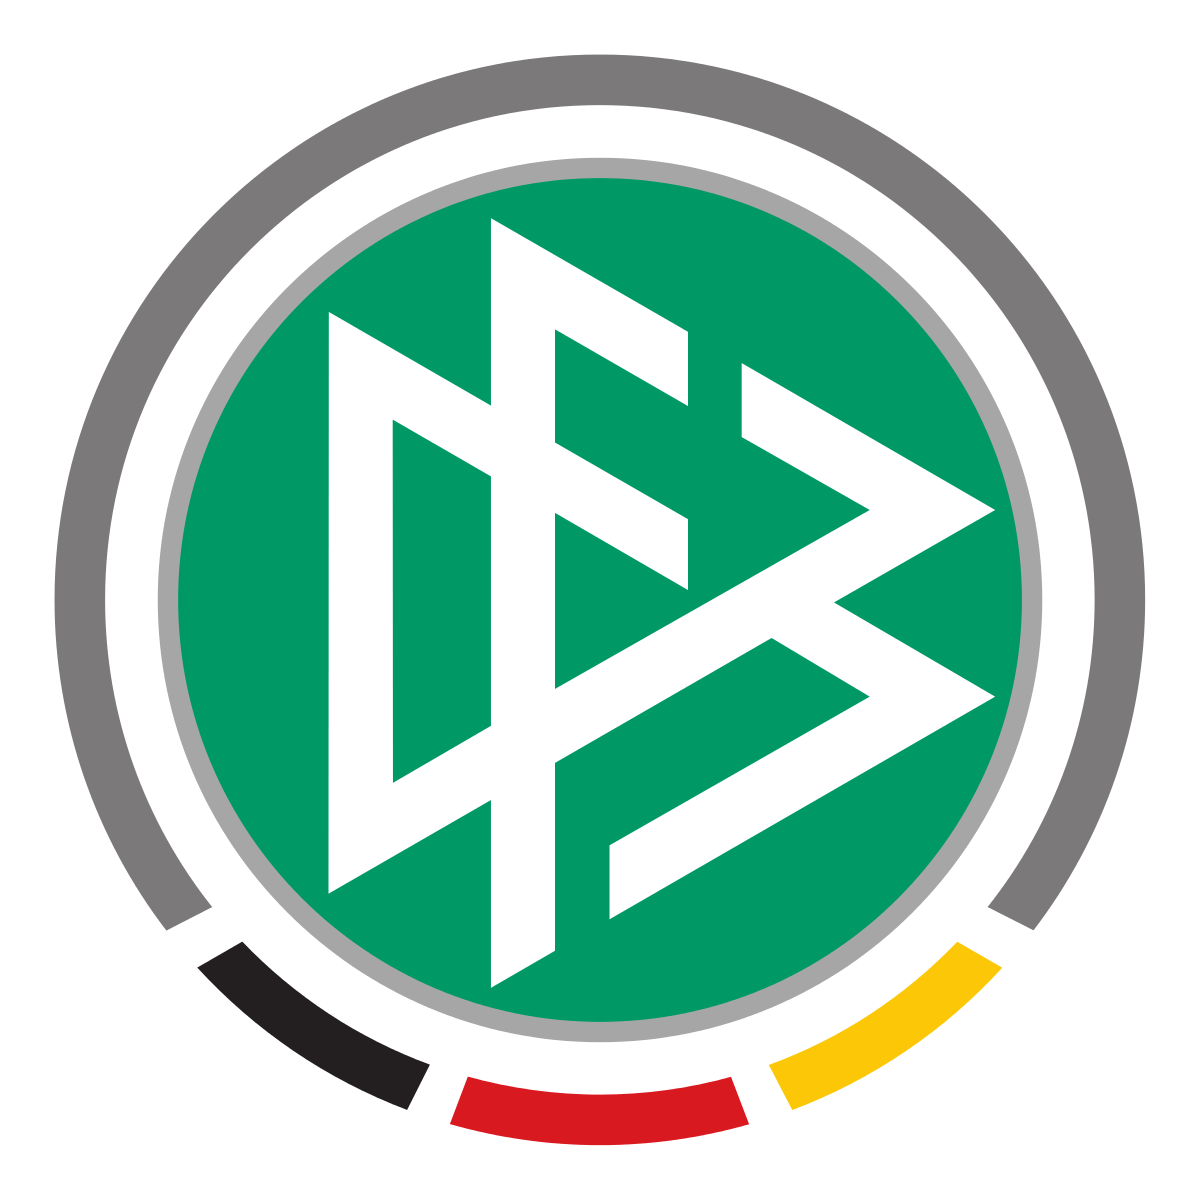 DFB Logo - German Football Association